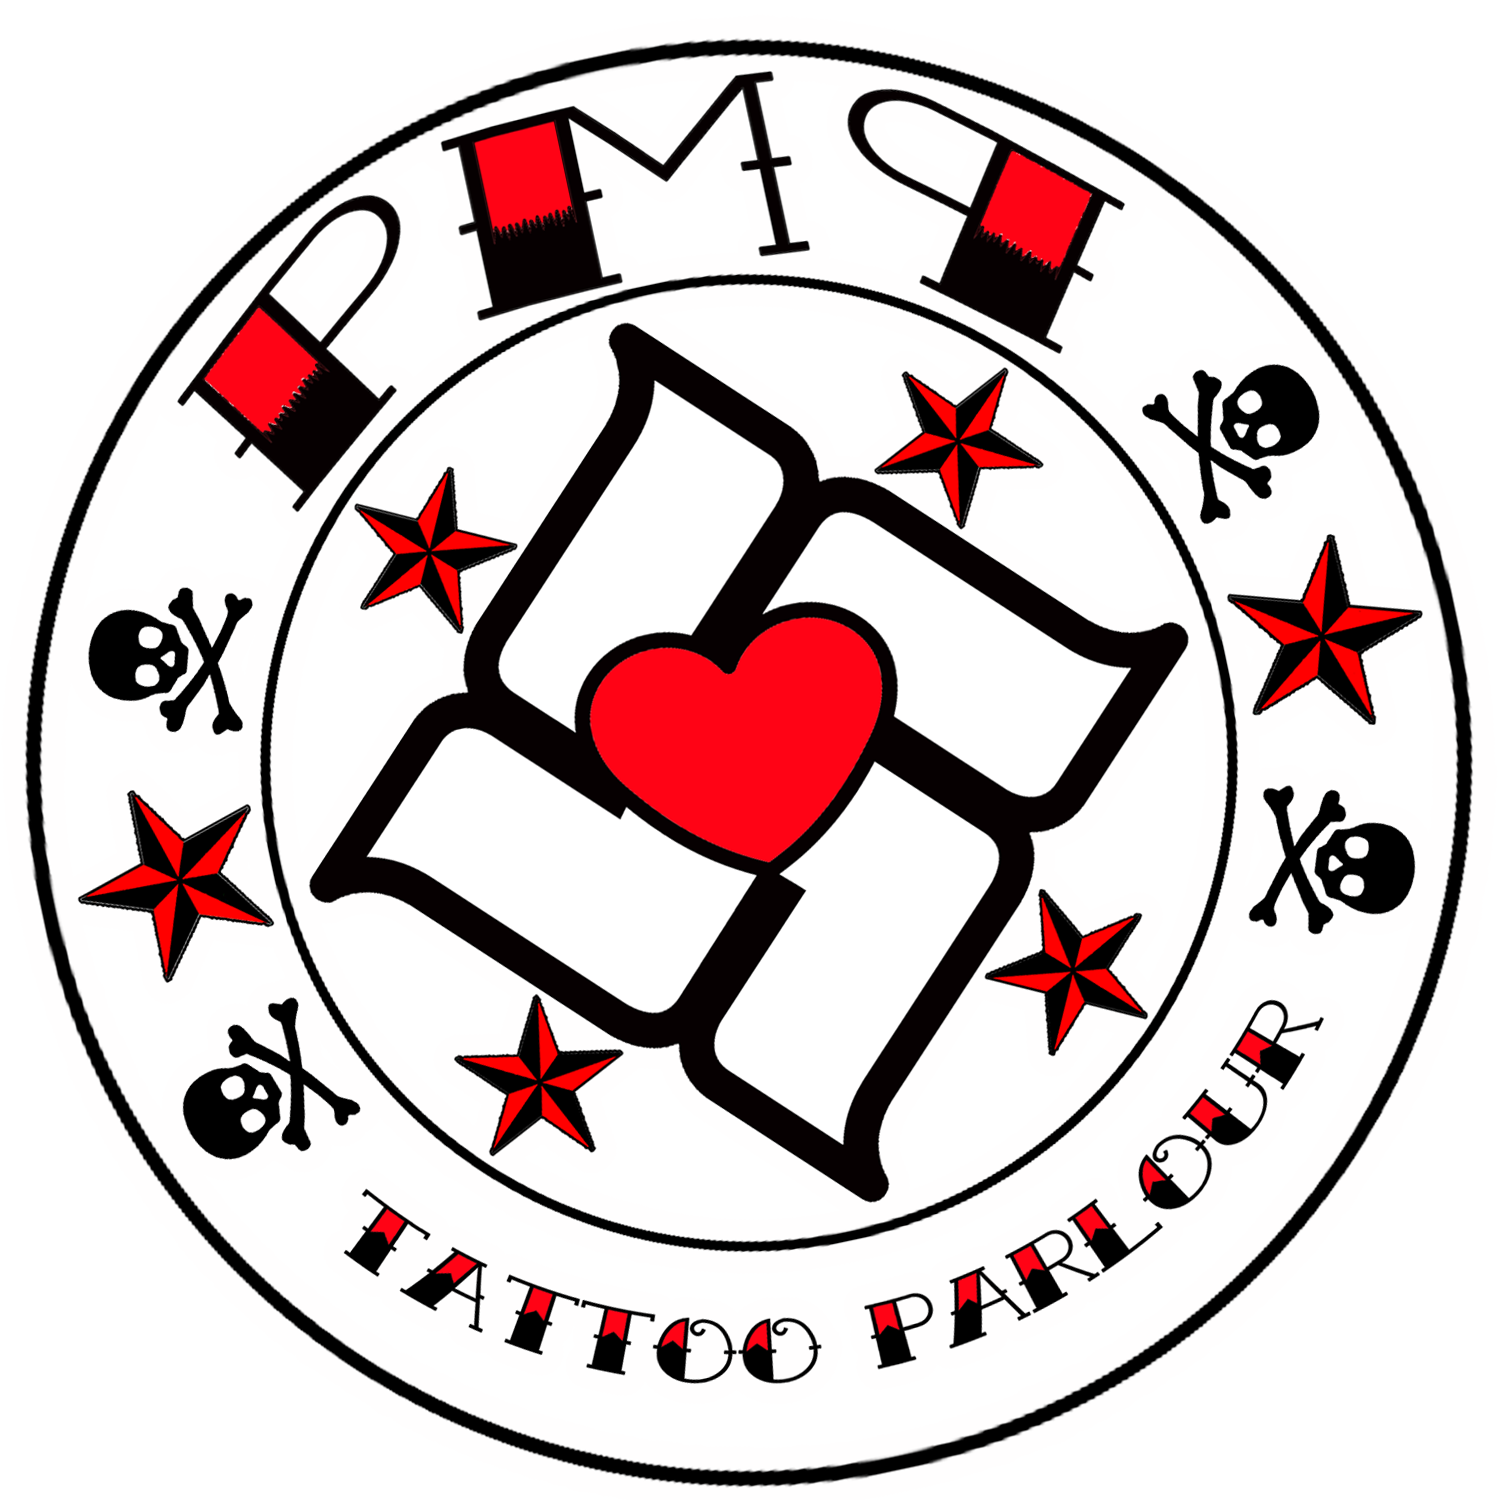 PMP TattooParlour